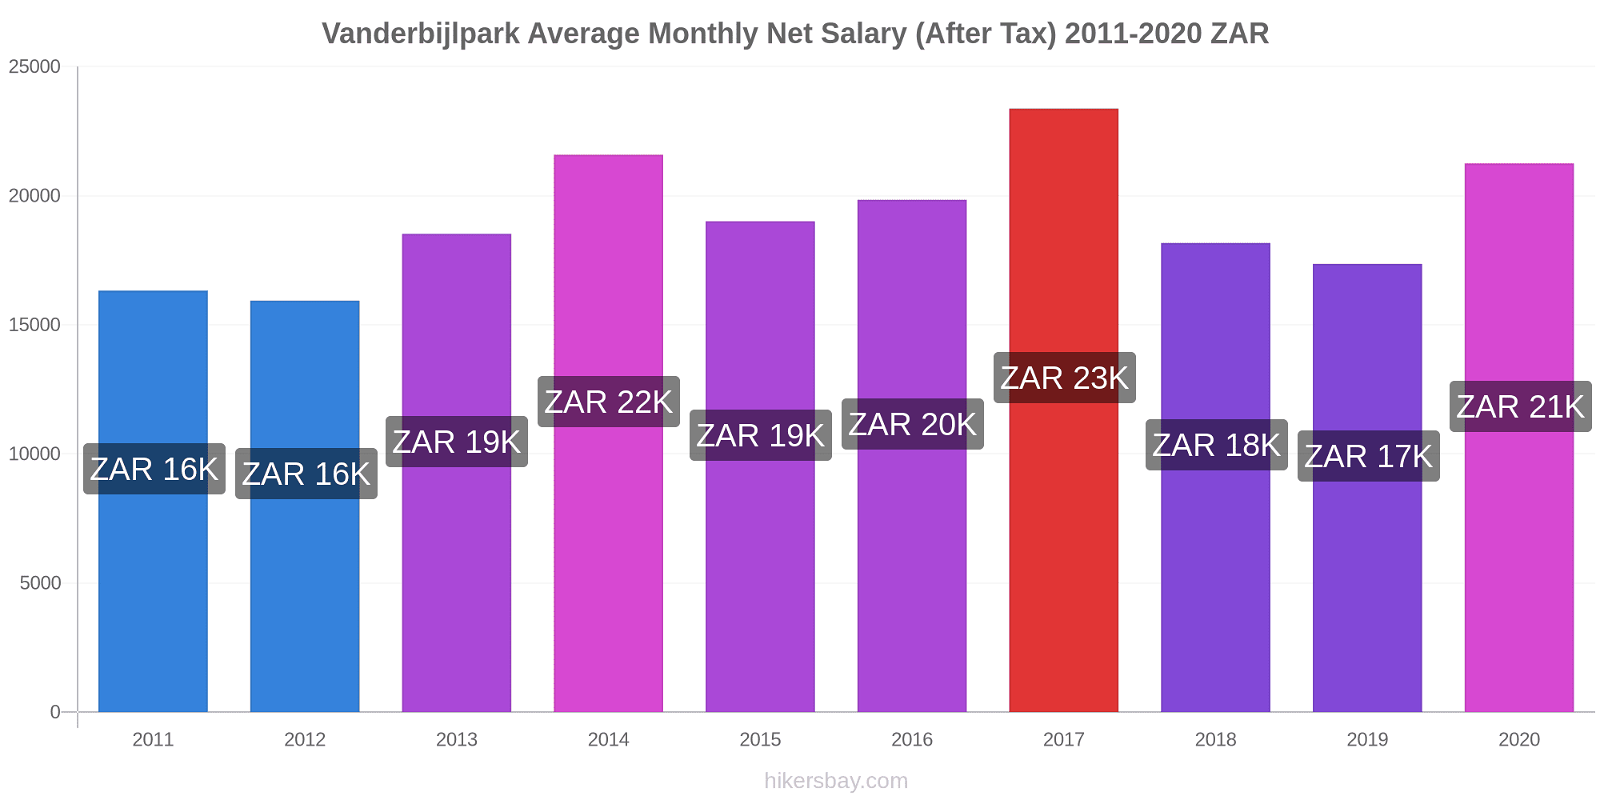 Vanderbijlpark price changes Average Monthly Net Salary (After Tax) hikersbay.com